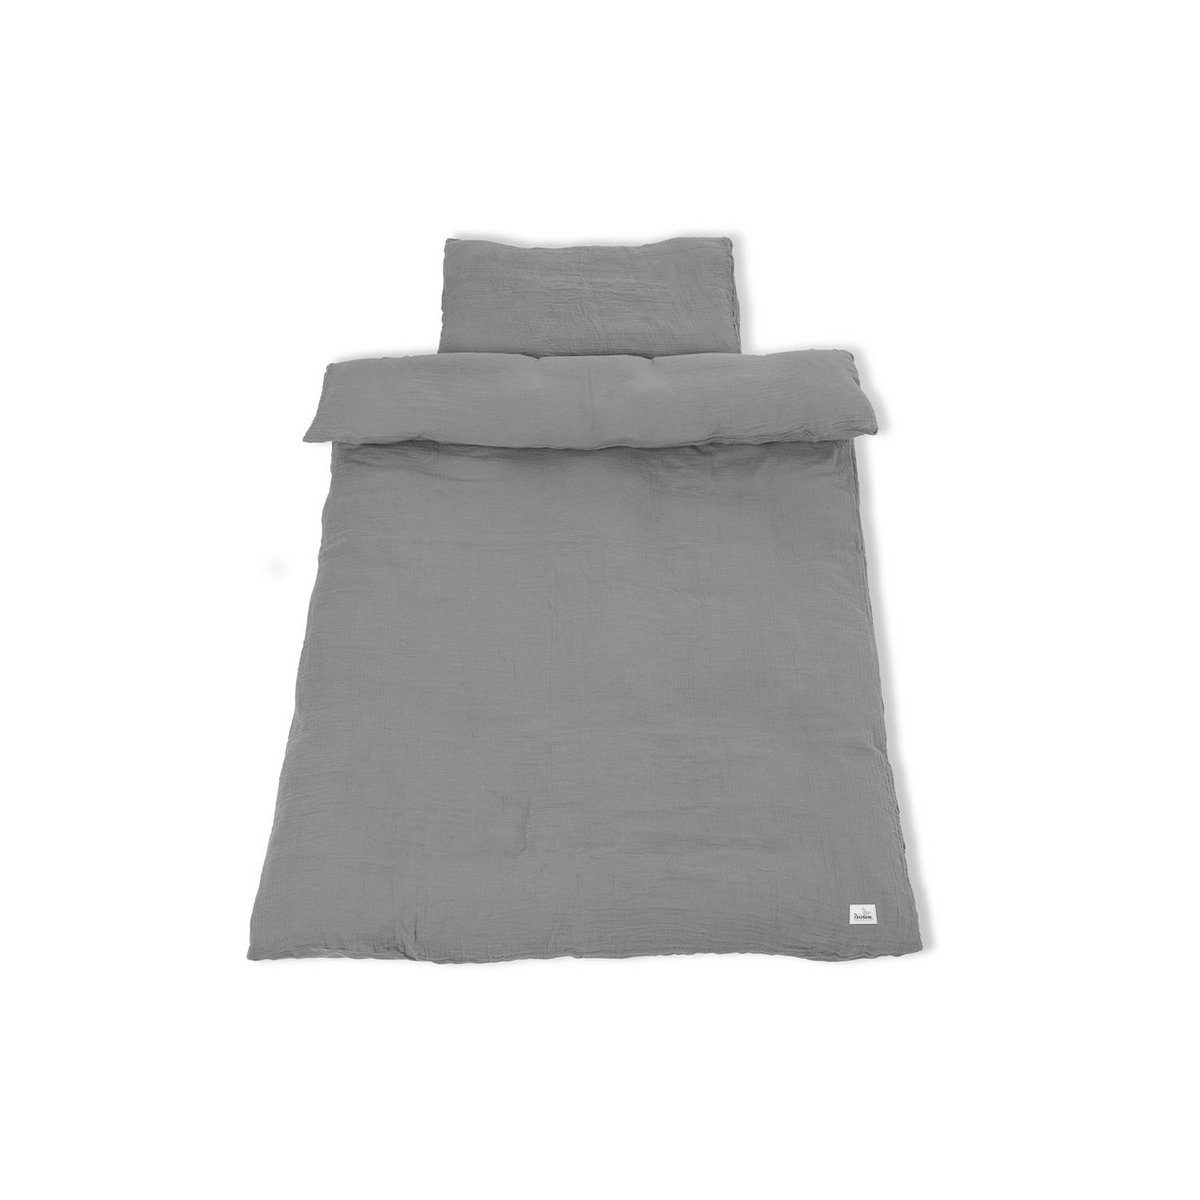 Musselin Bettbezug Set für Kinderbetten grau 2-tlg